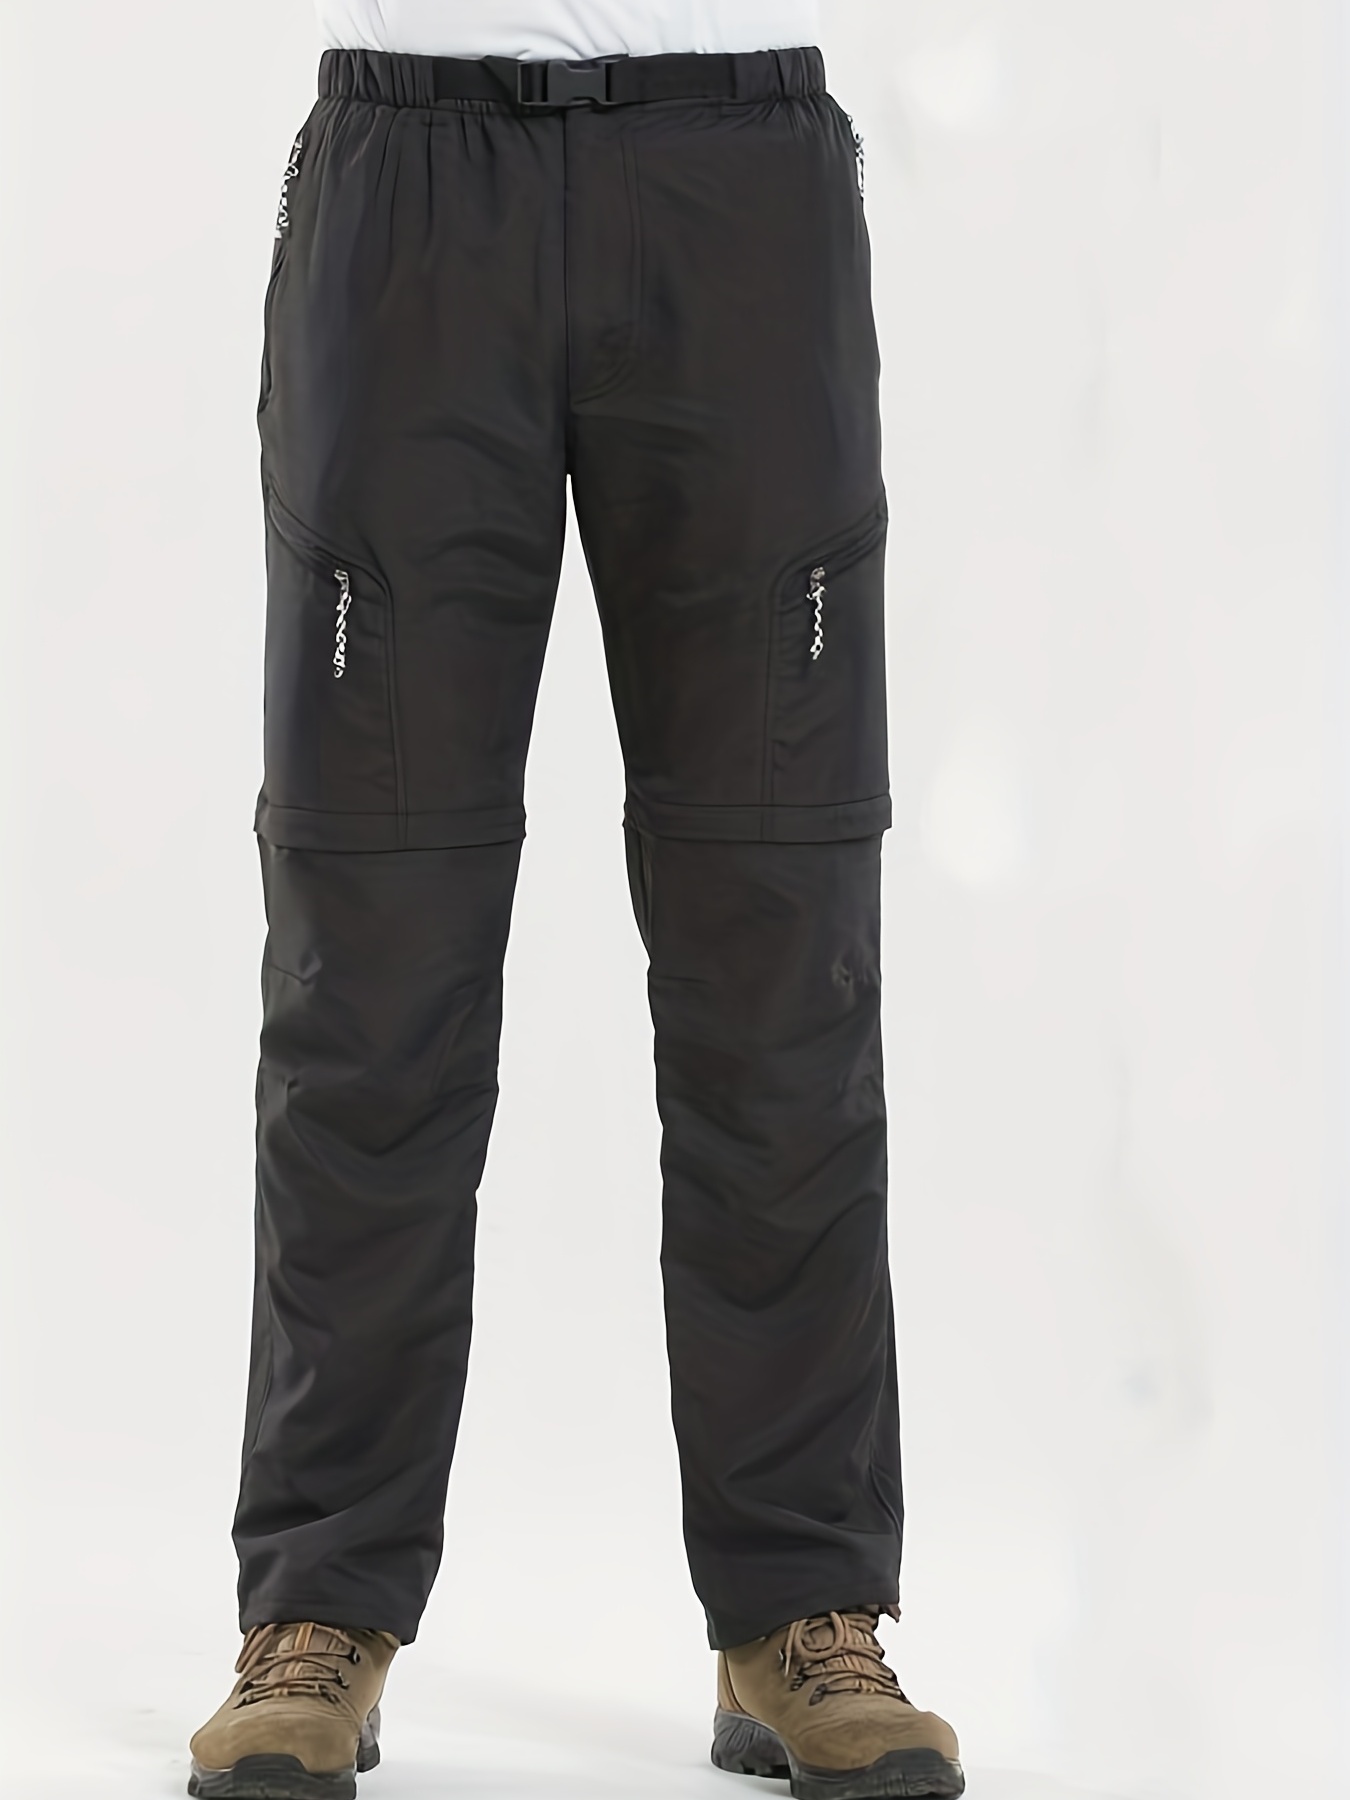 33,000ft Men's Hiking Golf Capri Pants 3/4 Cargo Quick Dry Lightweight  Stretch Below Knee Shorts Pants Travel Casual 